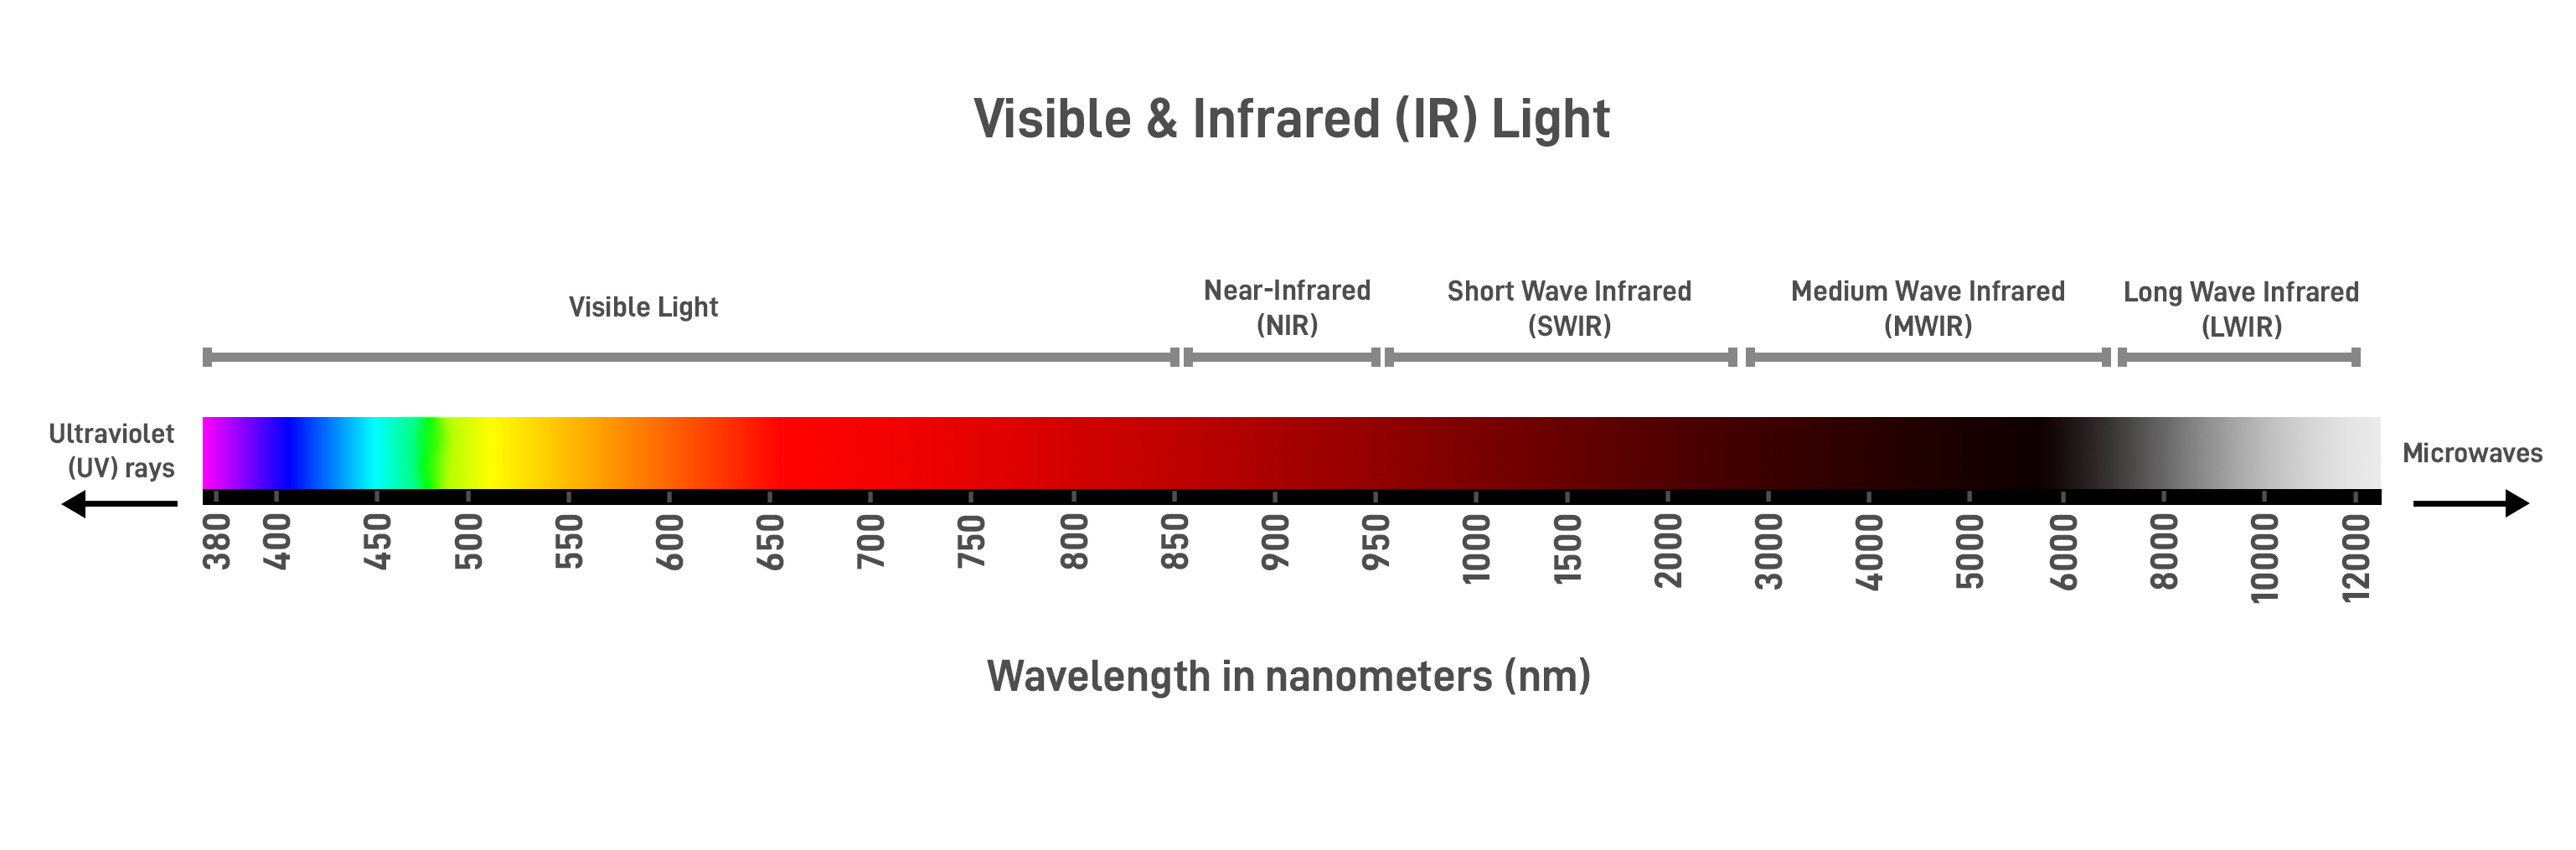 Visible Light Spectrum + IR